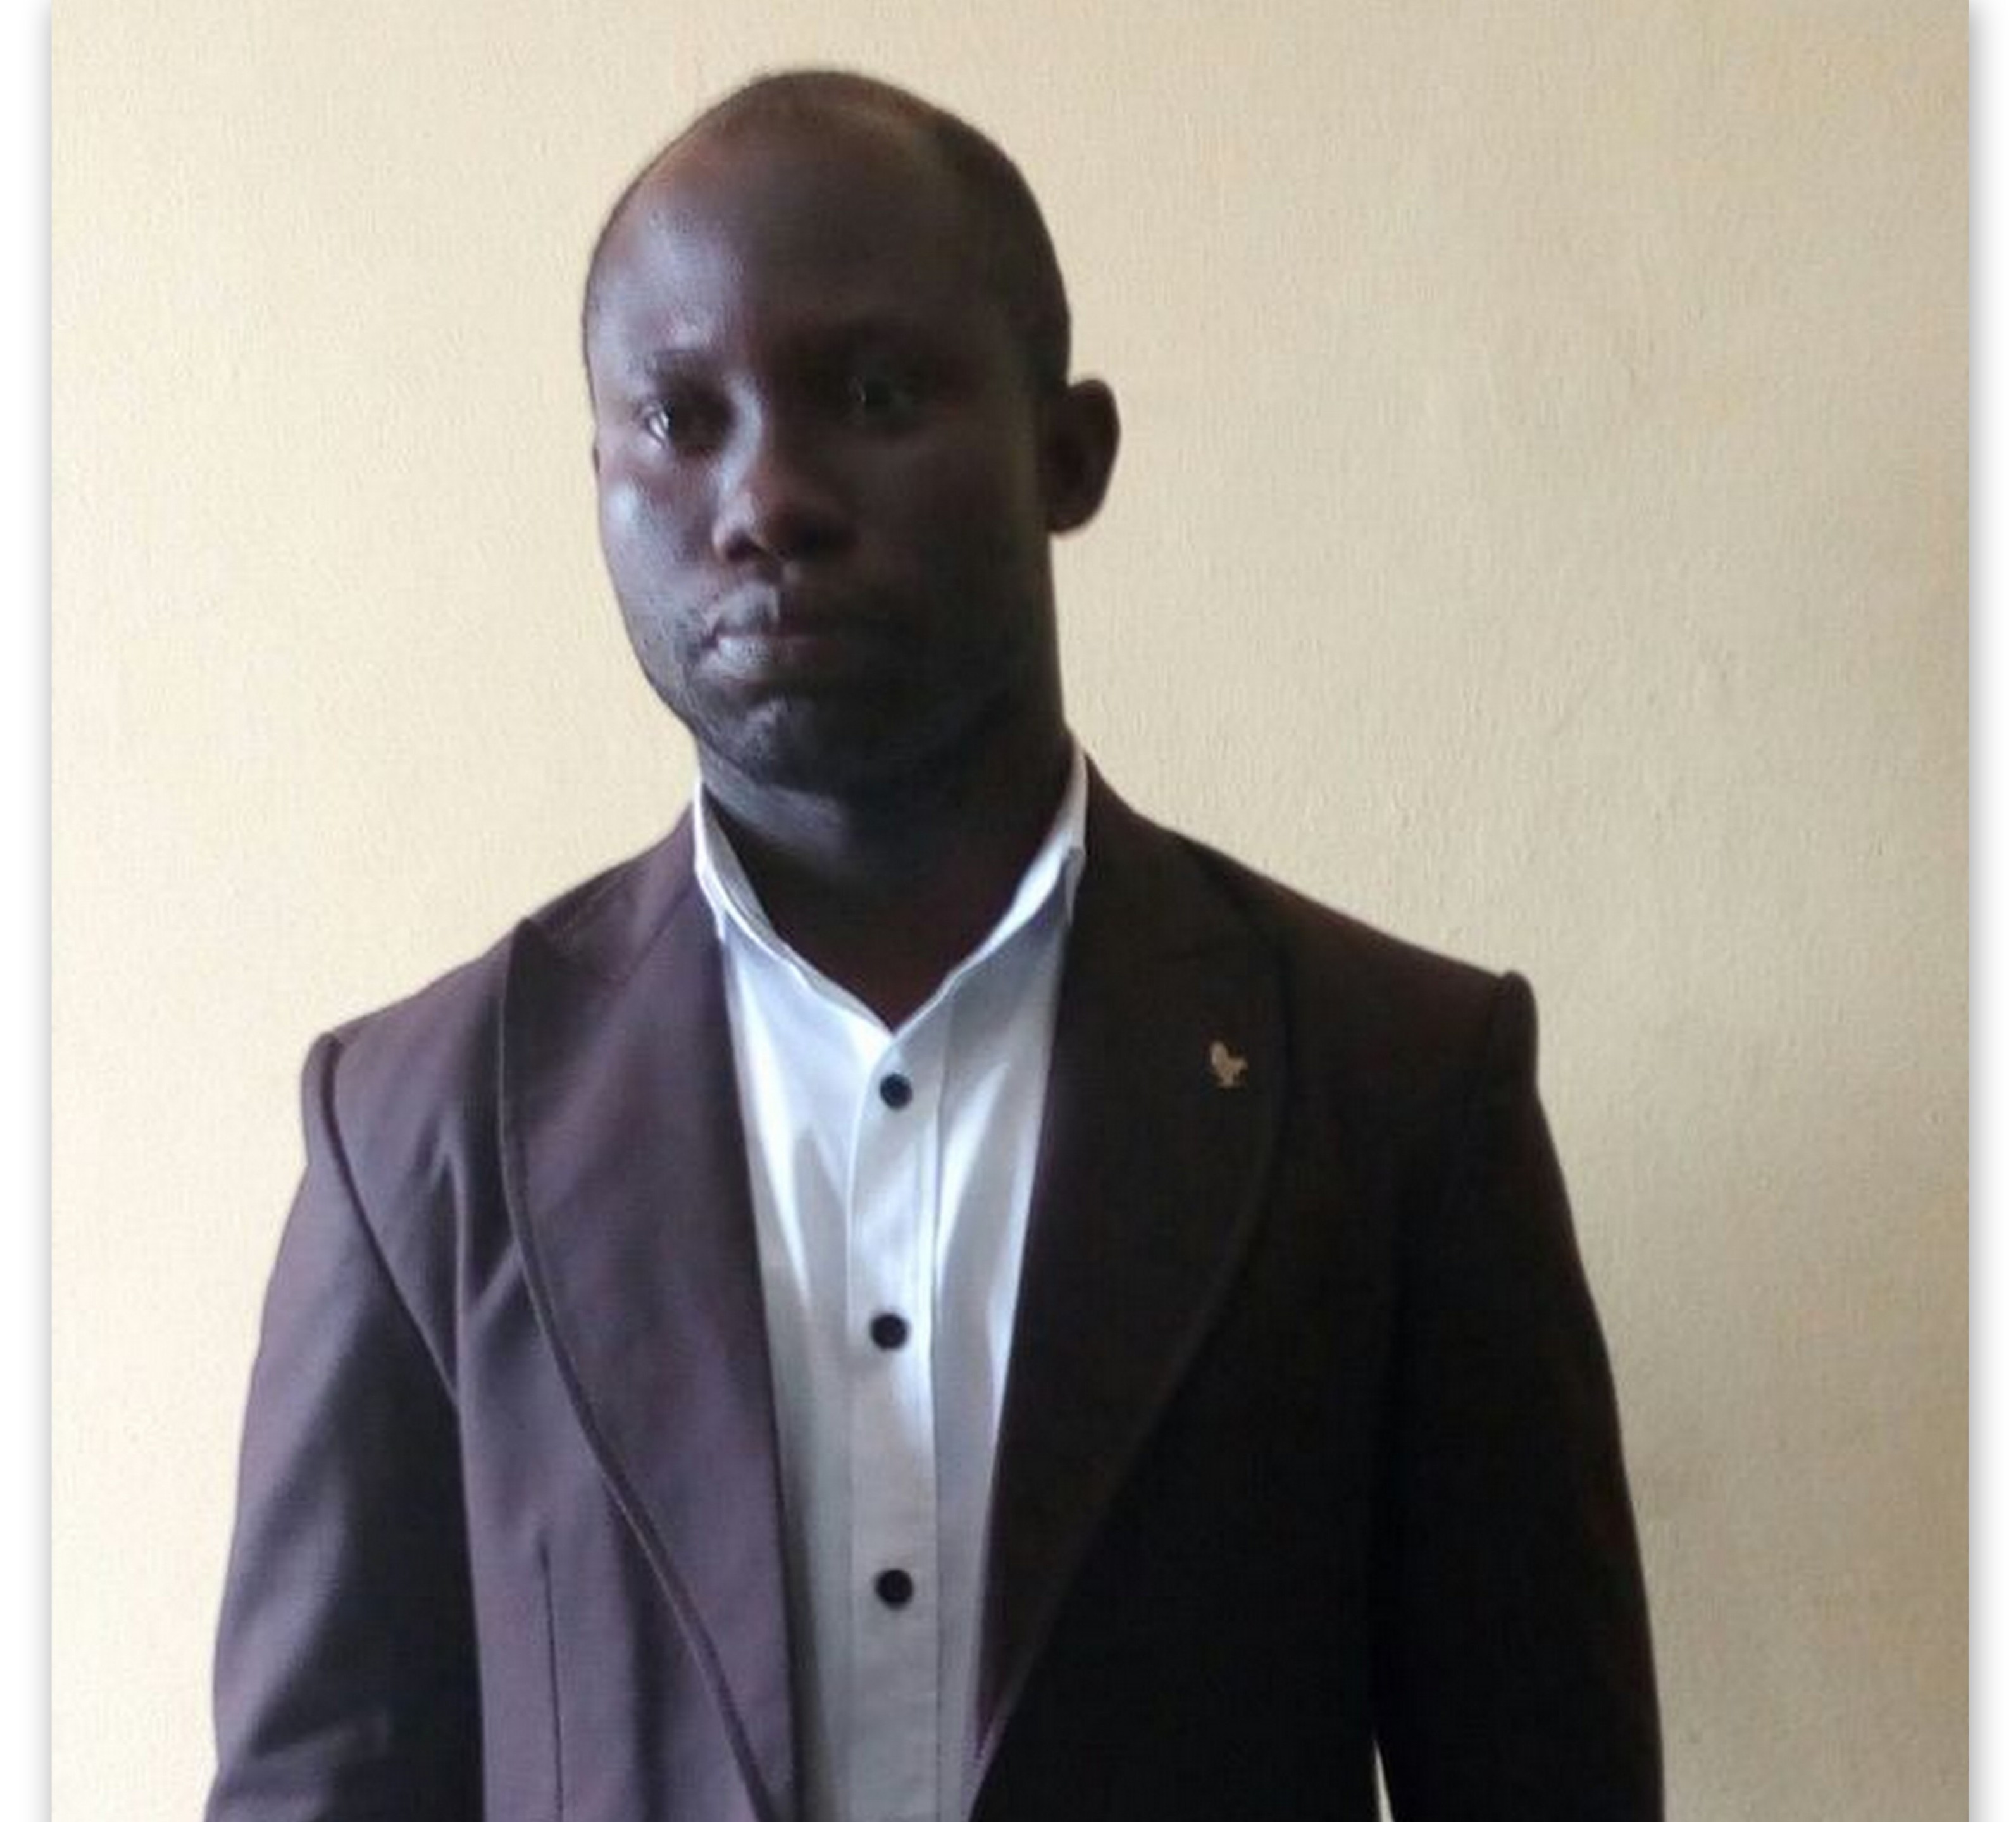 The suspect, identified as Gadiel Baah Nyumutei